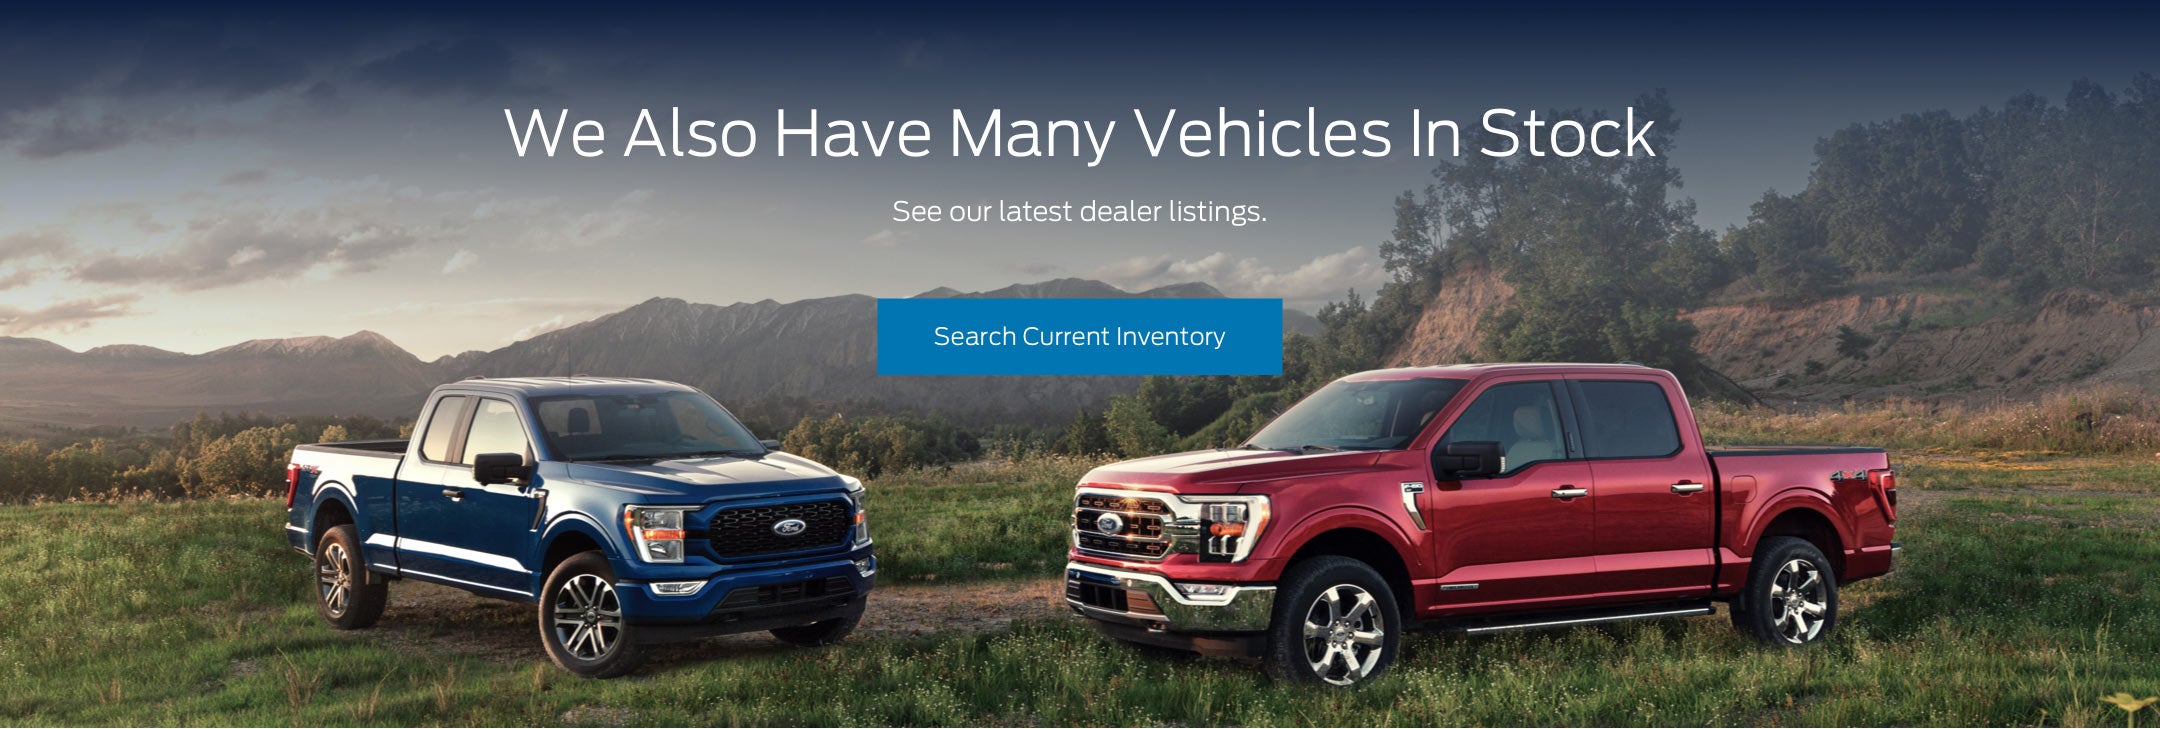 Ford vehicles in stock | Nashville Ford in Nashville GA